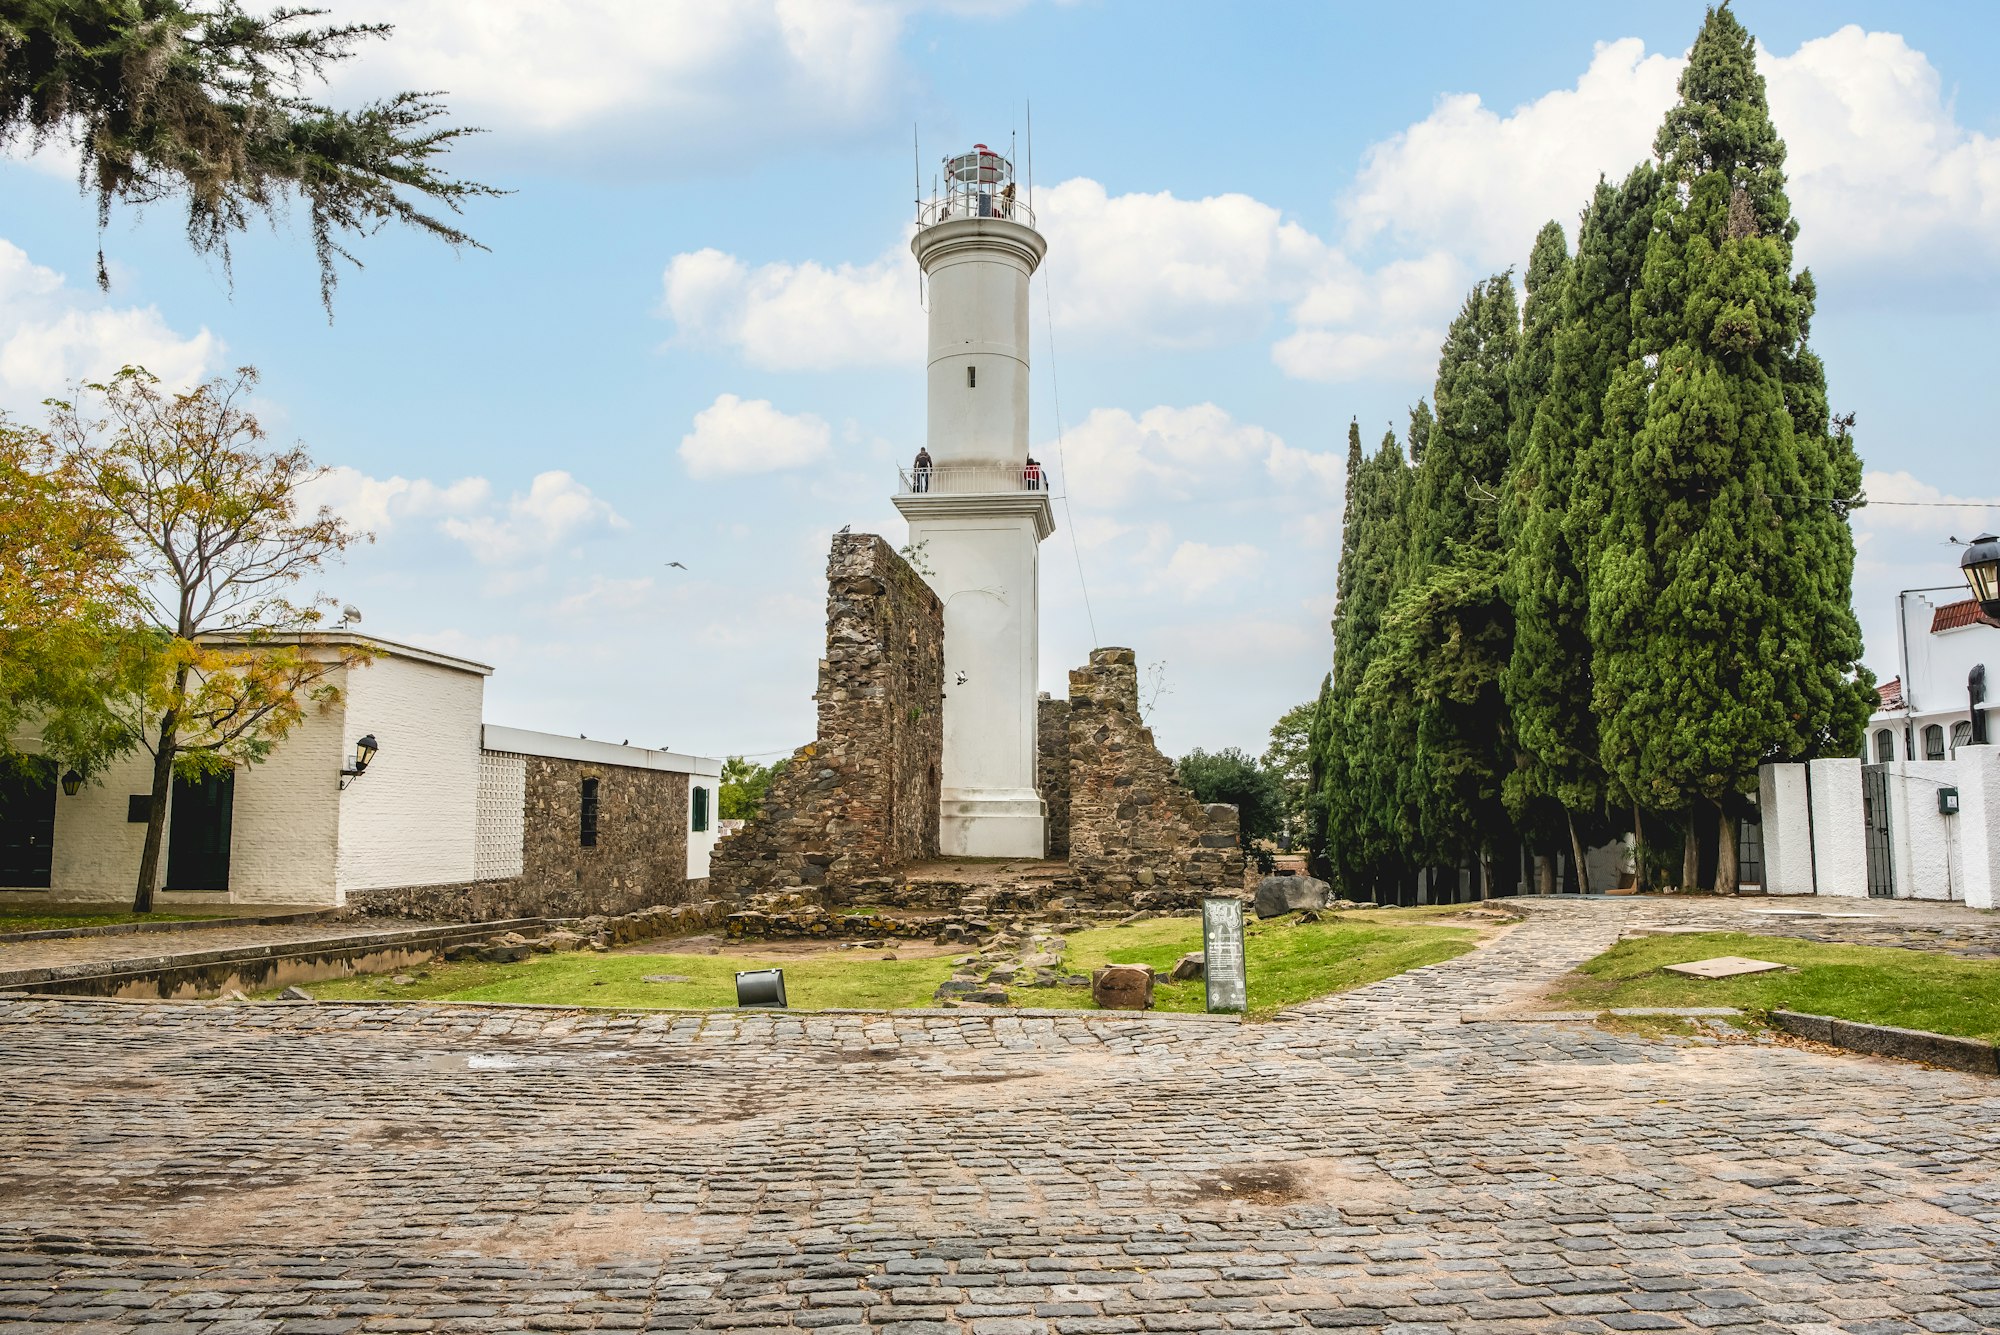 Ruins and Lighthouse at Colonia del Sacramento, Uruguay.